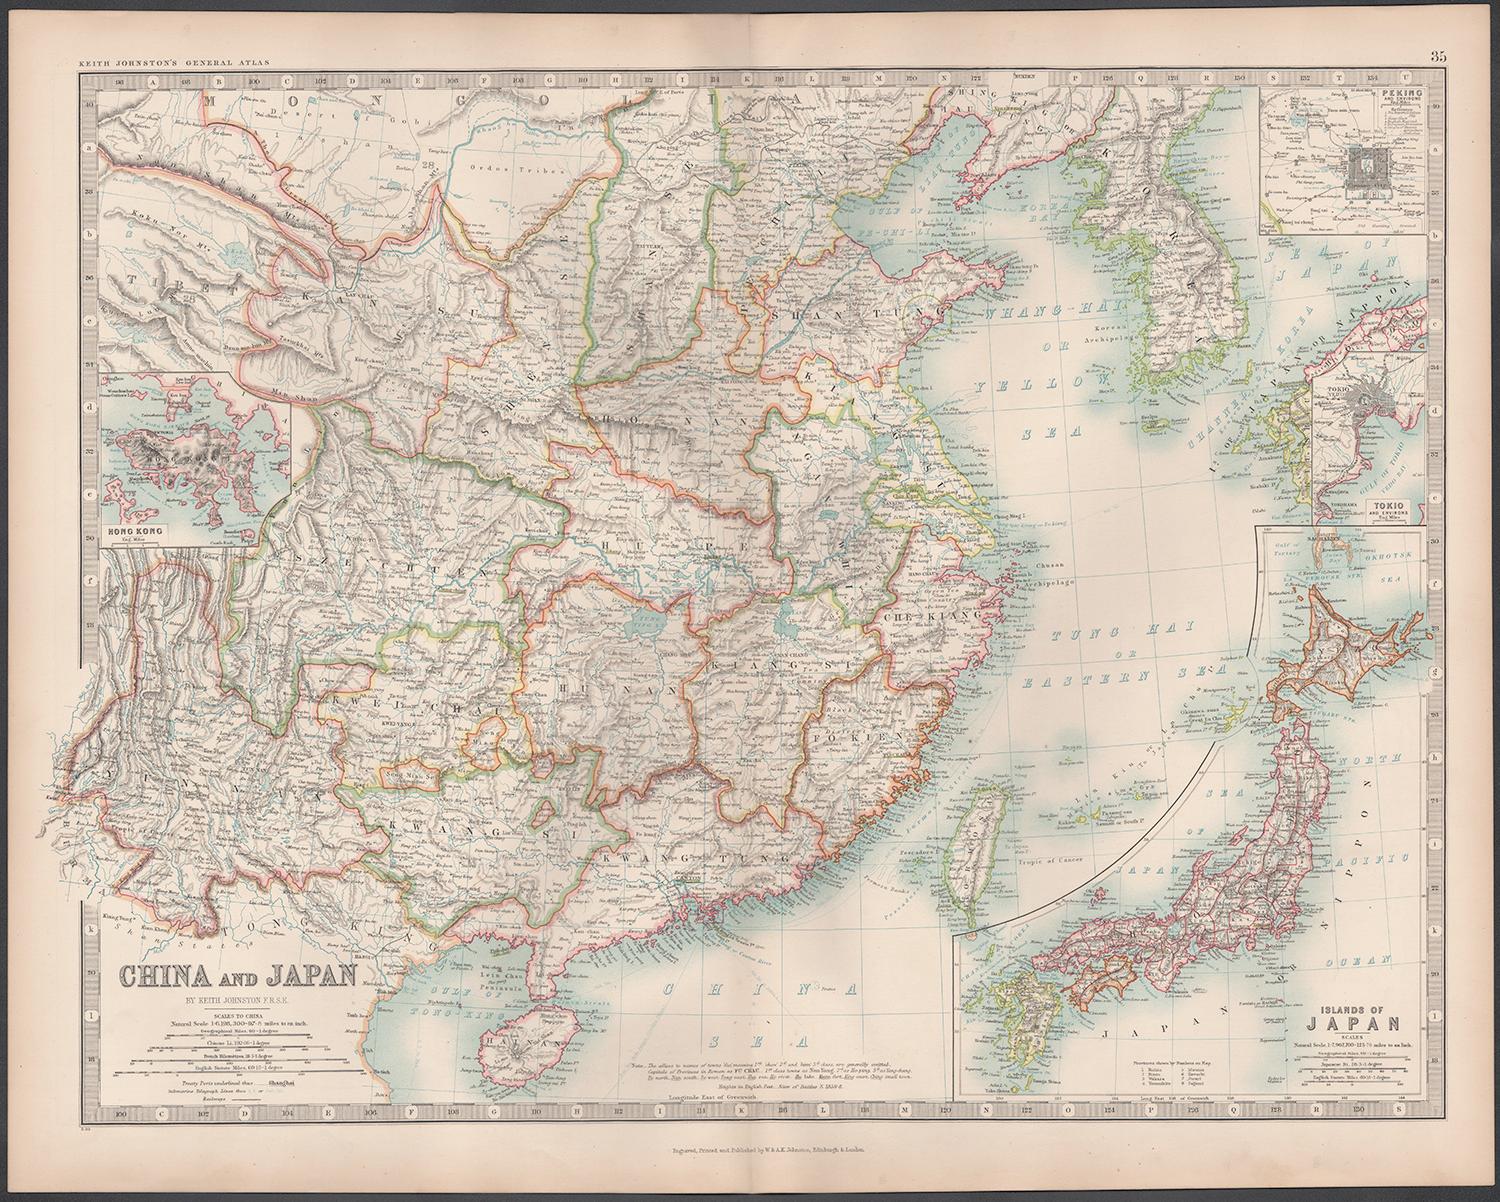 Chine et Japon, carte ancienne anglaise d'Alexander Keith Johnston, 1901